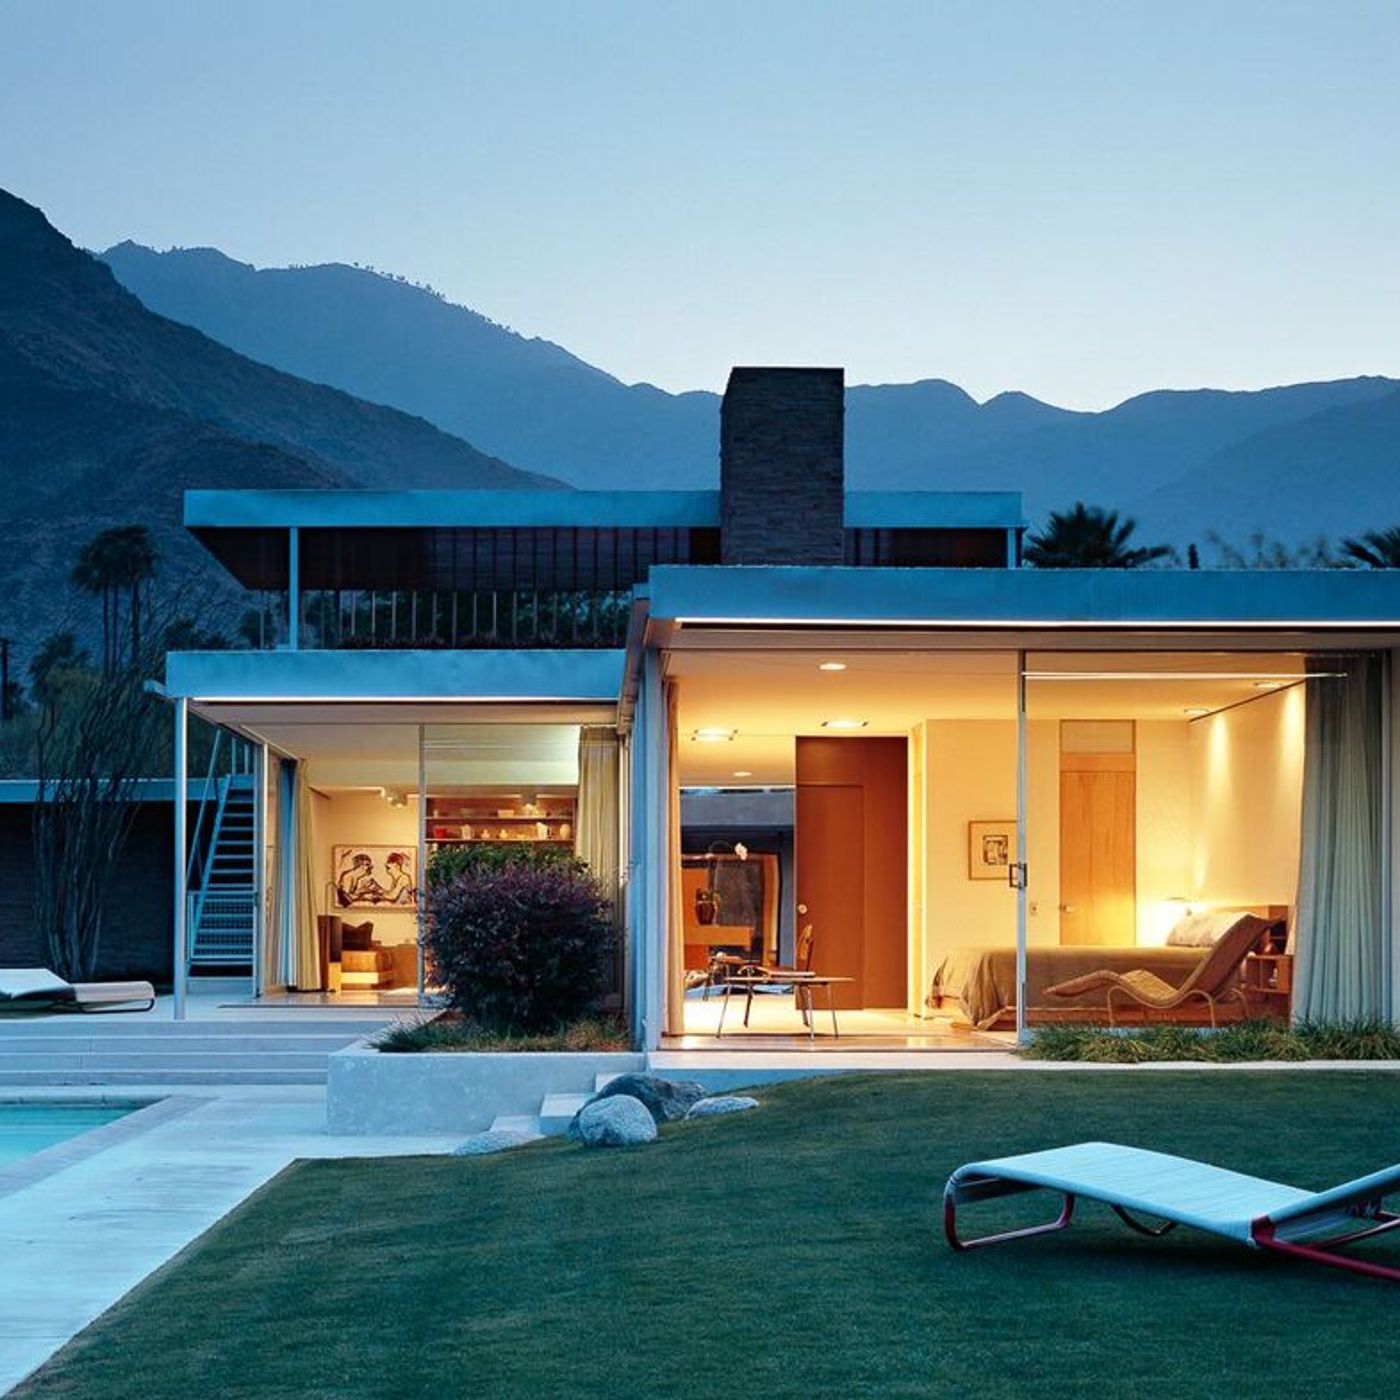 11: The Story of Richard Neutra's Kaufmann Desert House in Palm Springs California